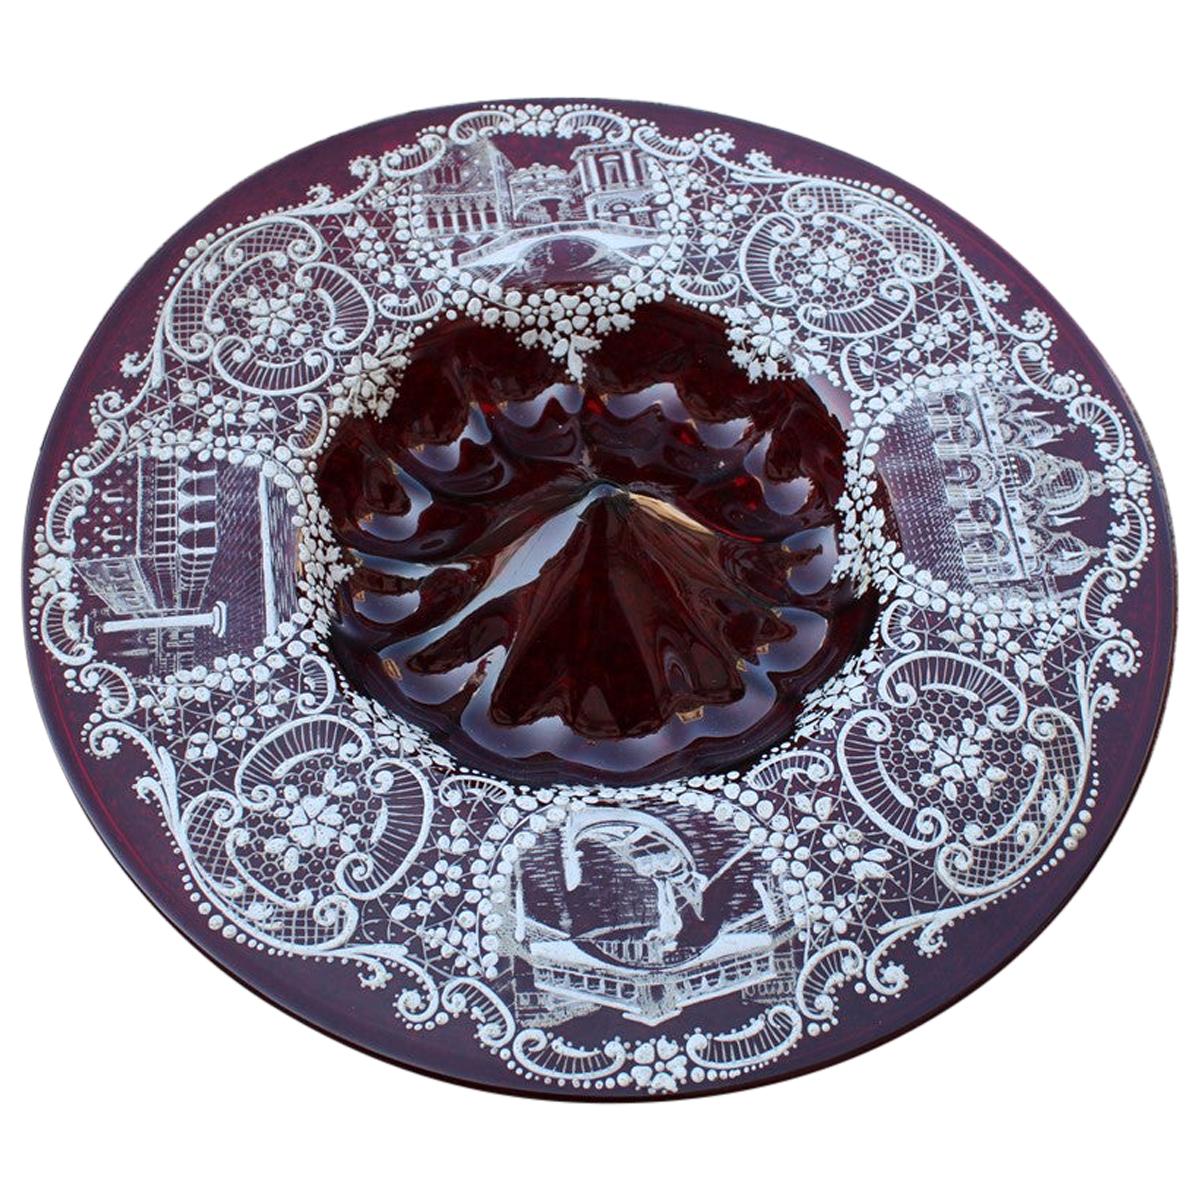 Red Rubin Murano Glass Decorative Bowl Style of Zecchin Cappellin 1920s Italy